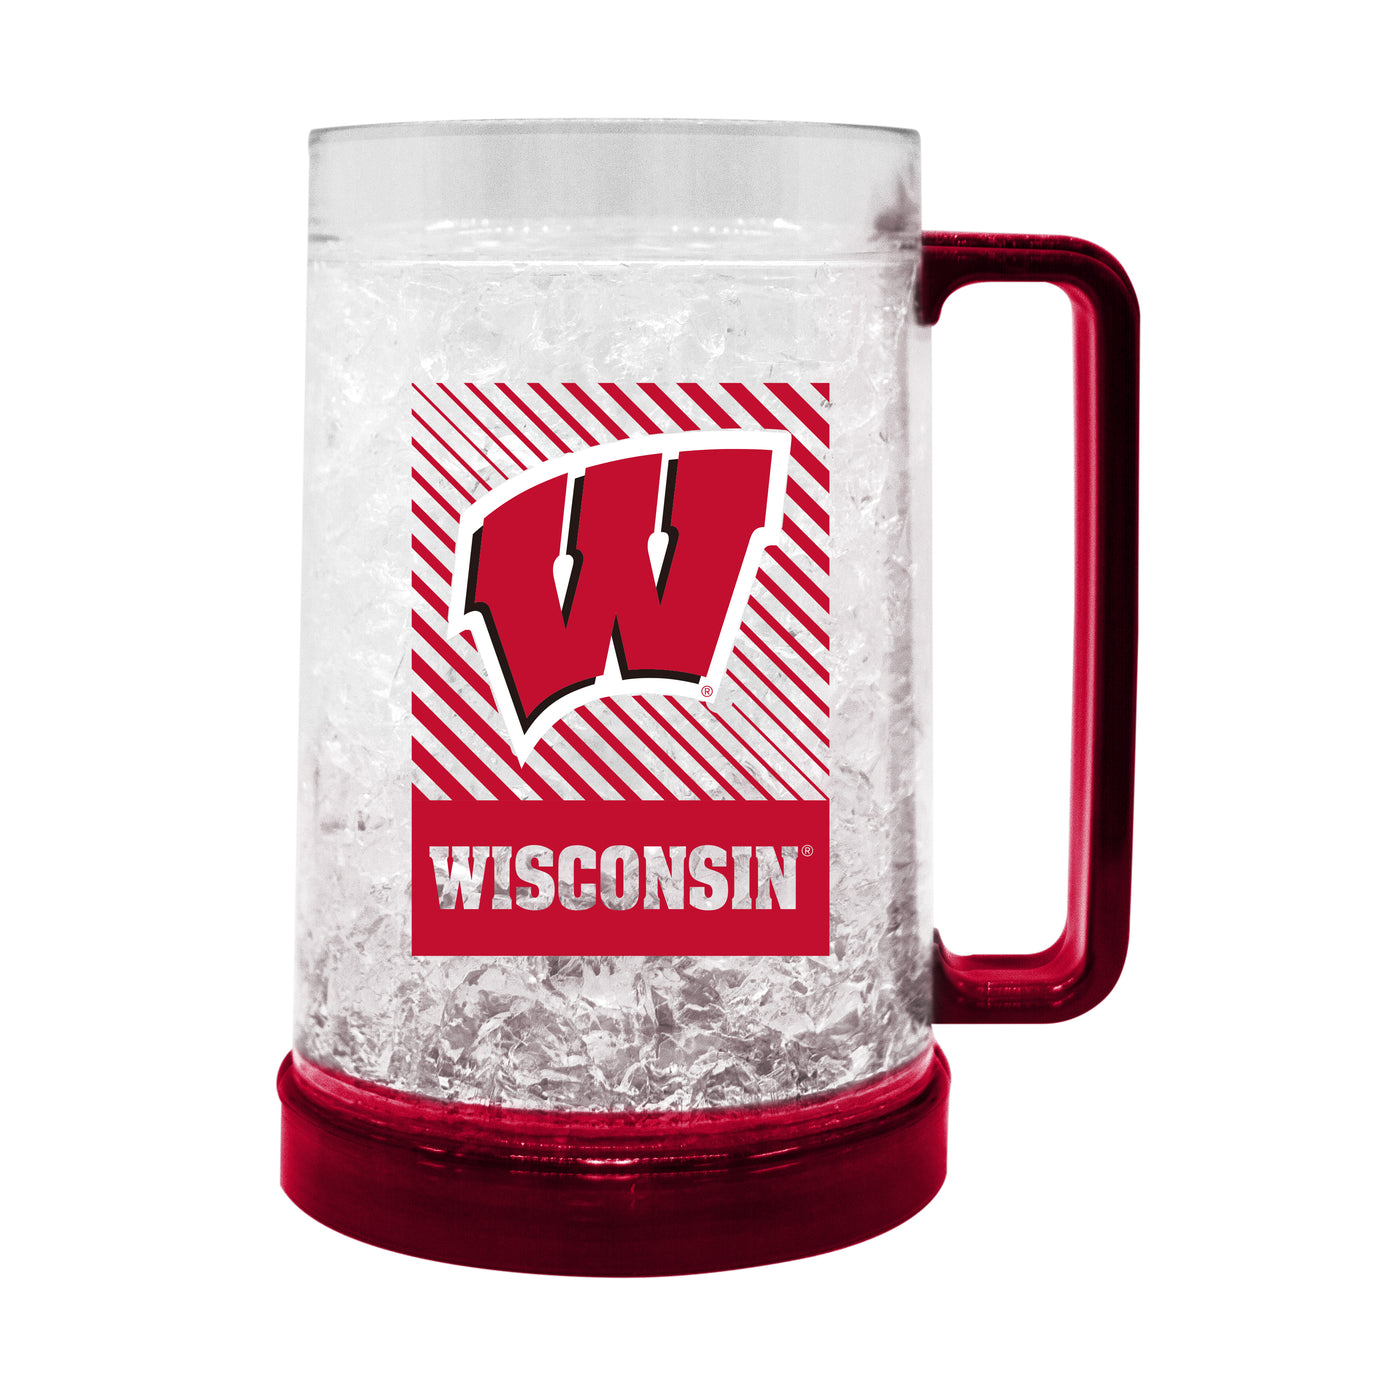 Wisconsin Freezer Mug